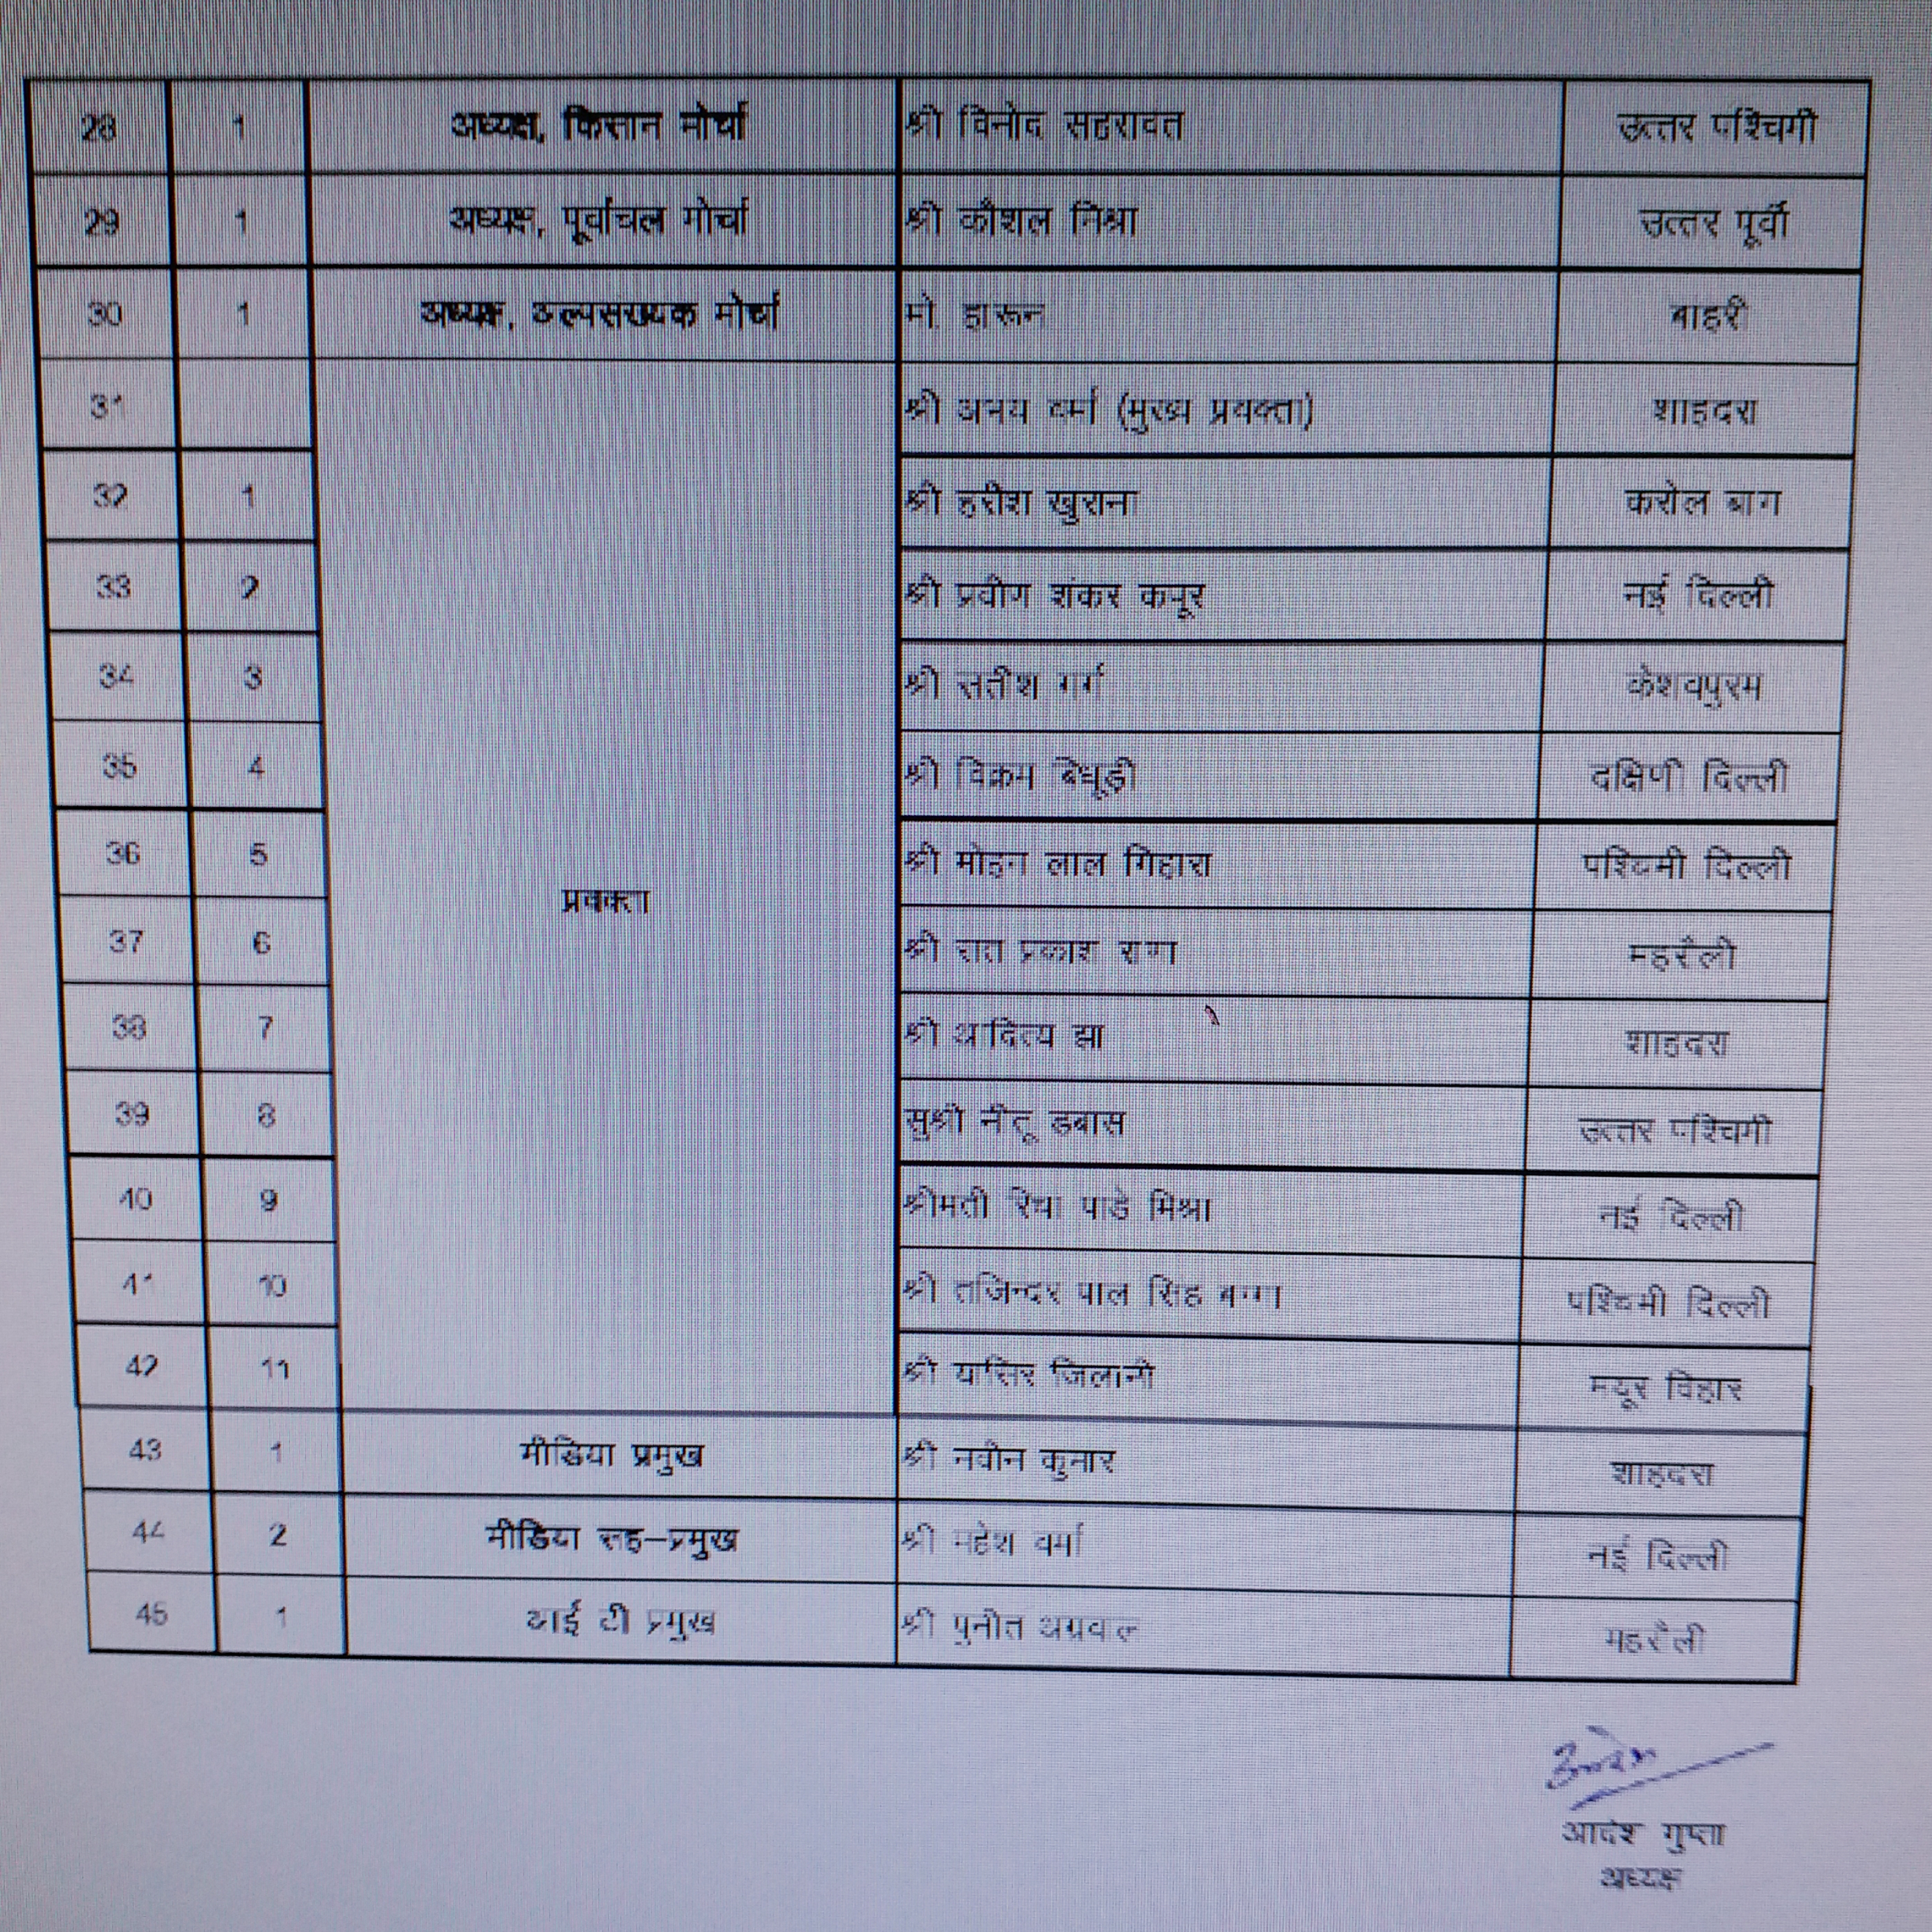 Delhi BJP new team Announcement Women also hold key positions